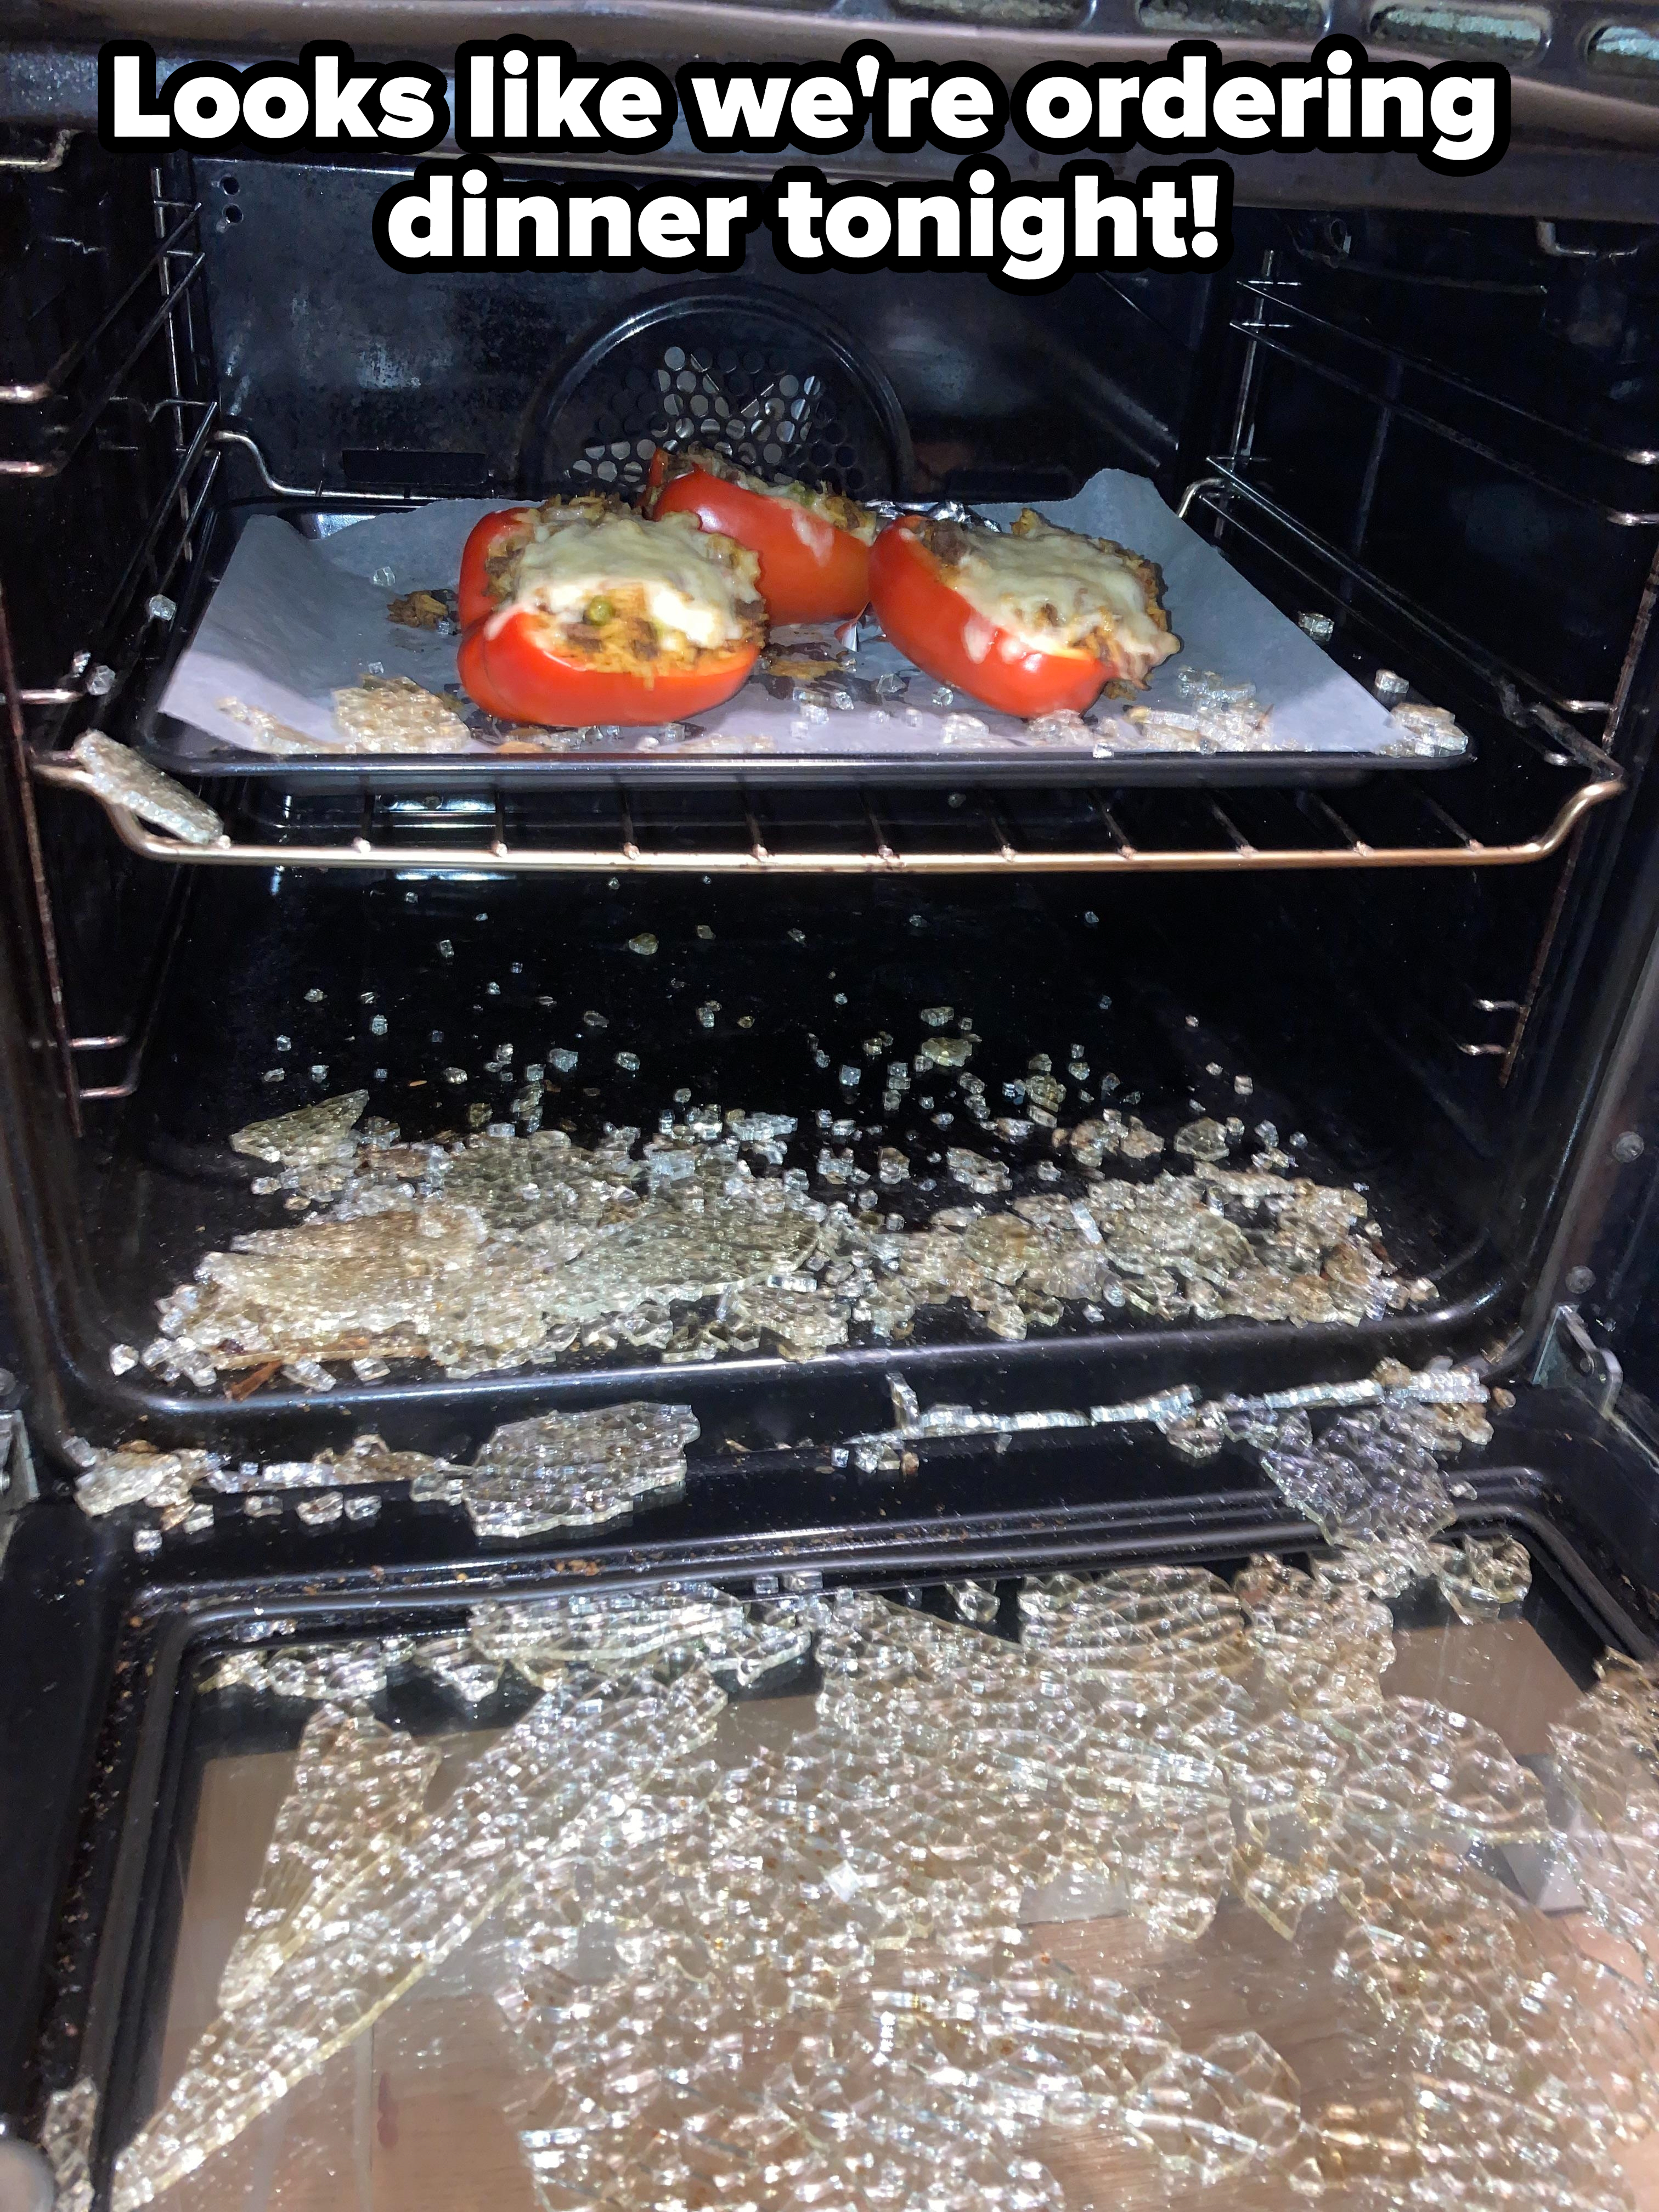 Broken glass in an oven